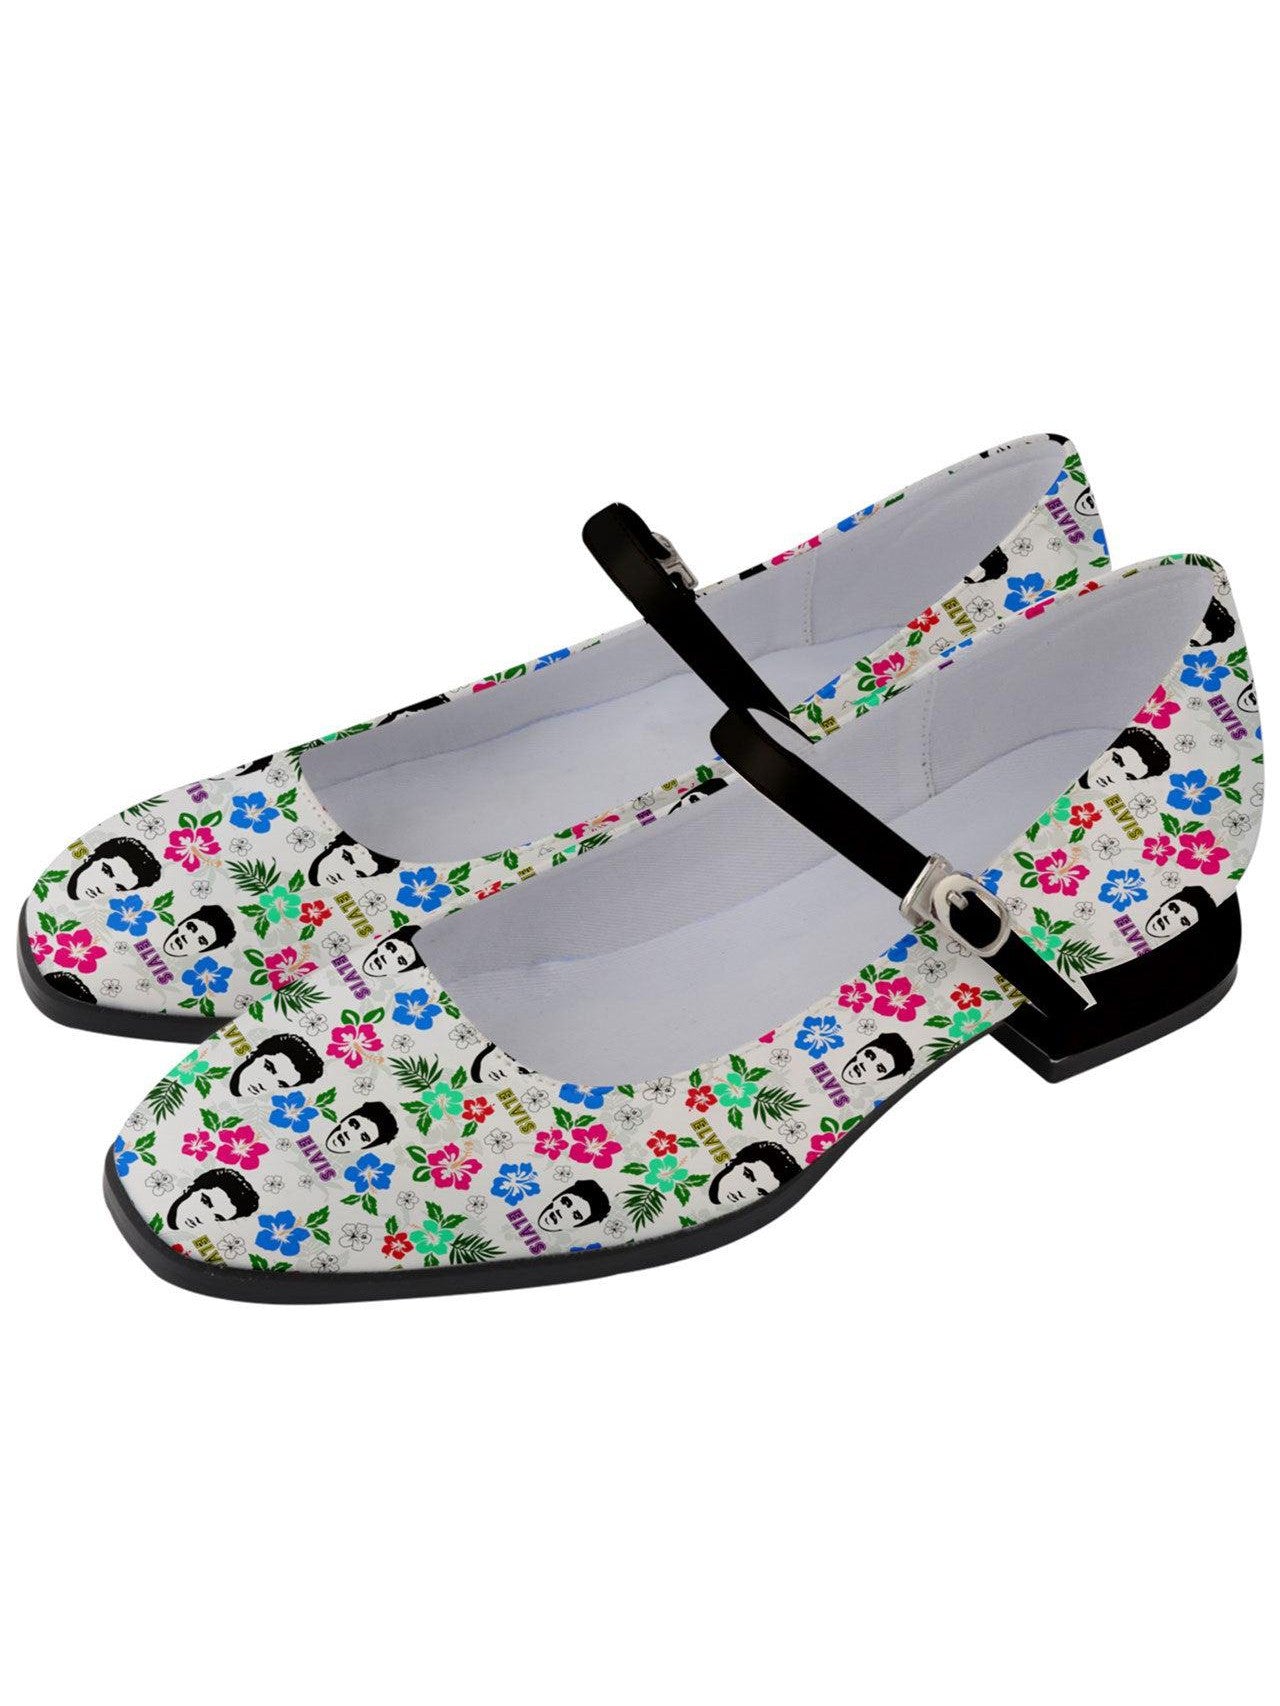 Mary Janes Shoes Cute Japanese Lolita Shoes Harajuku Cosplay Shoes for  Women  Walmartcom